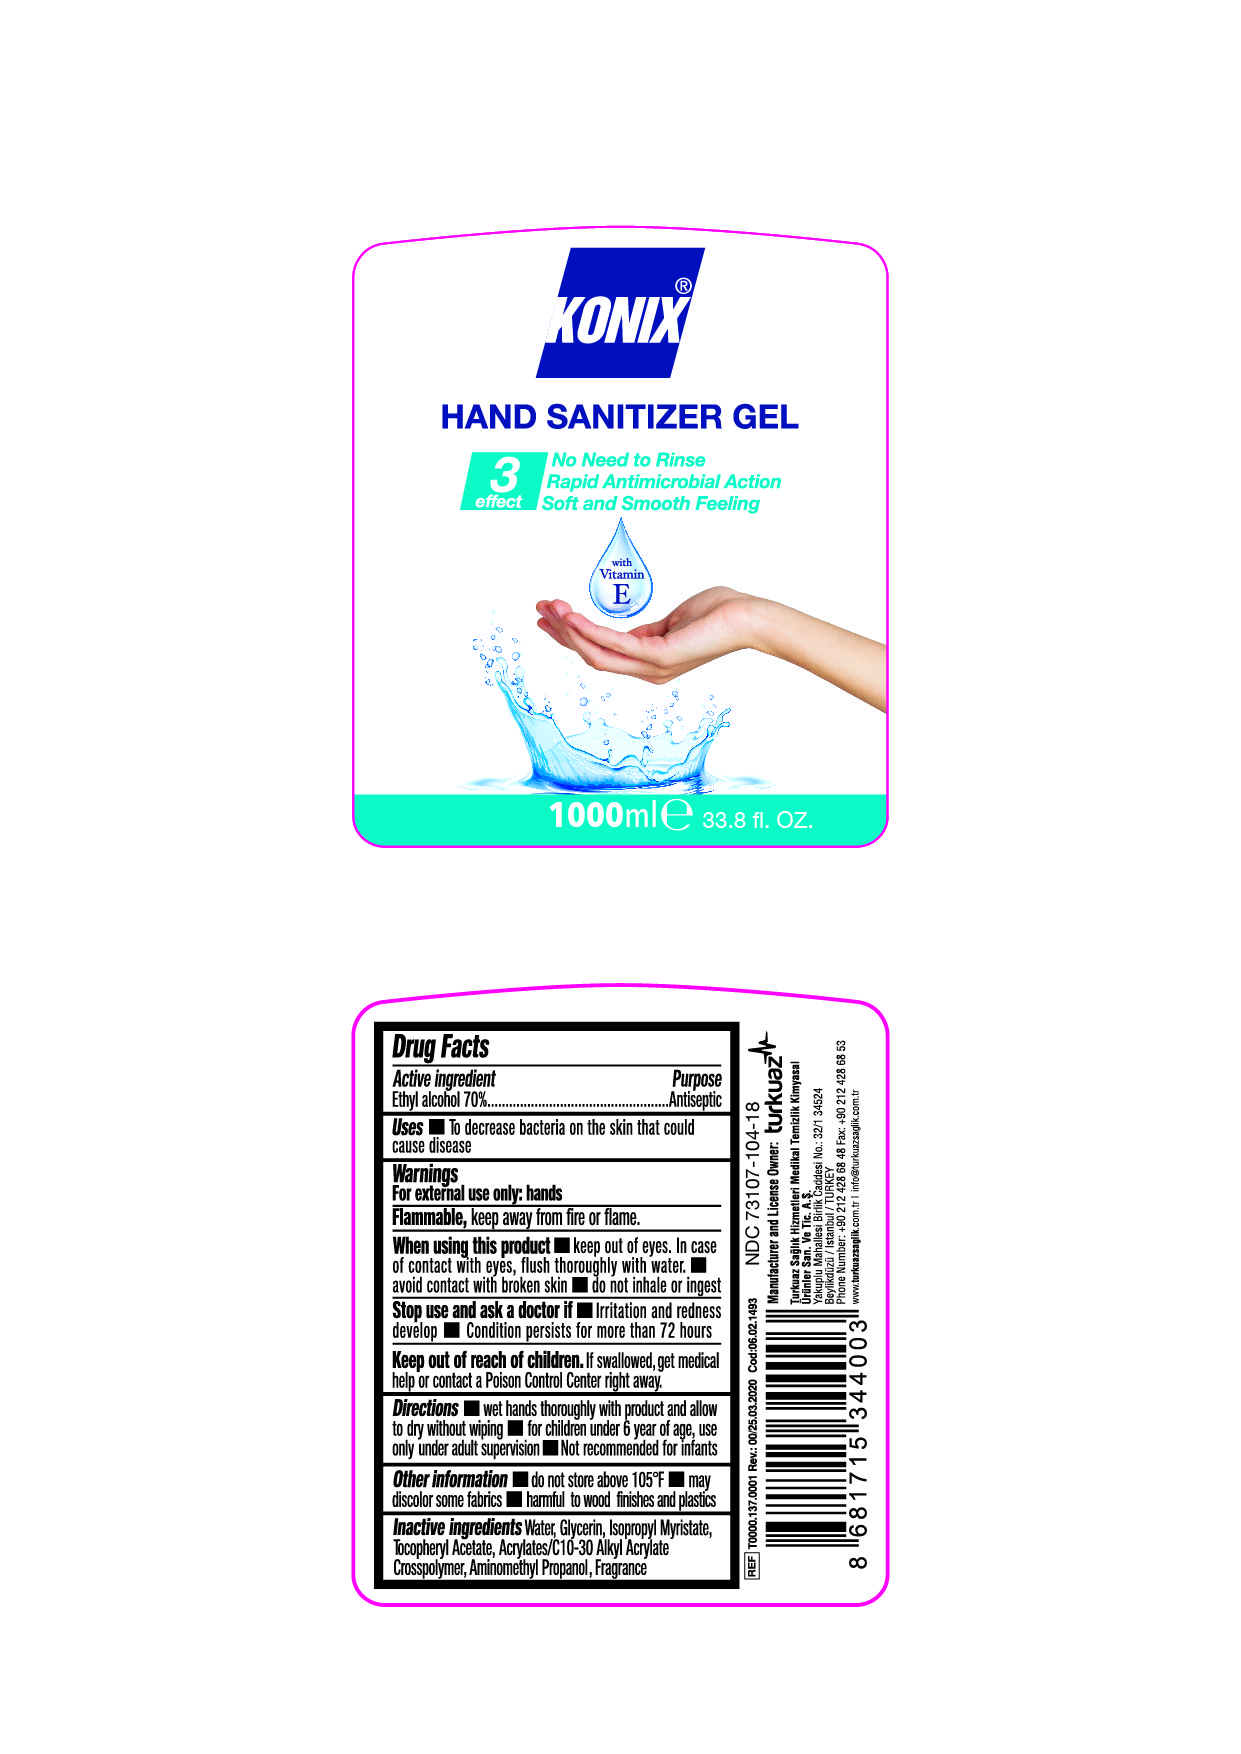 Konix Consumer sanitizer gel 1000 ml